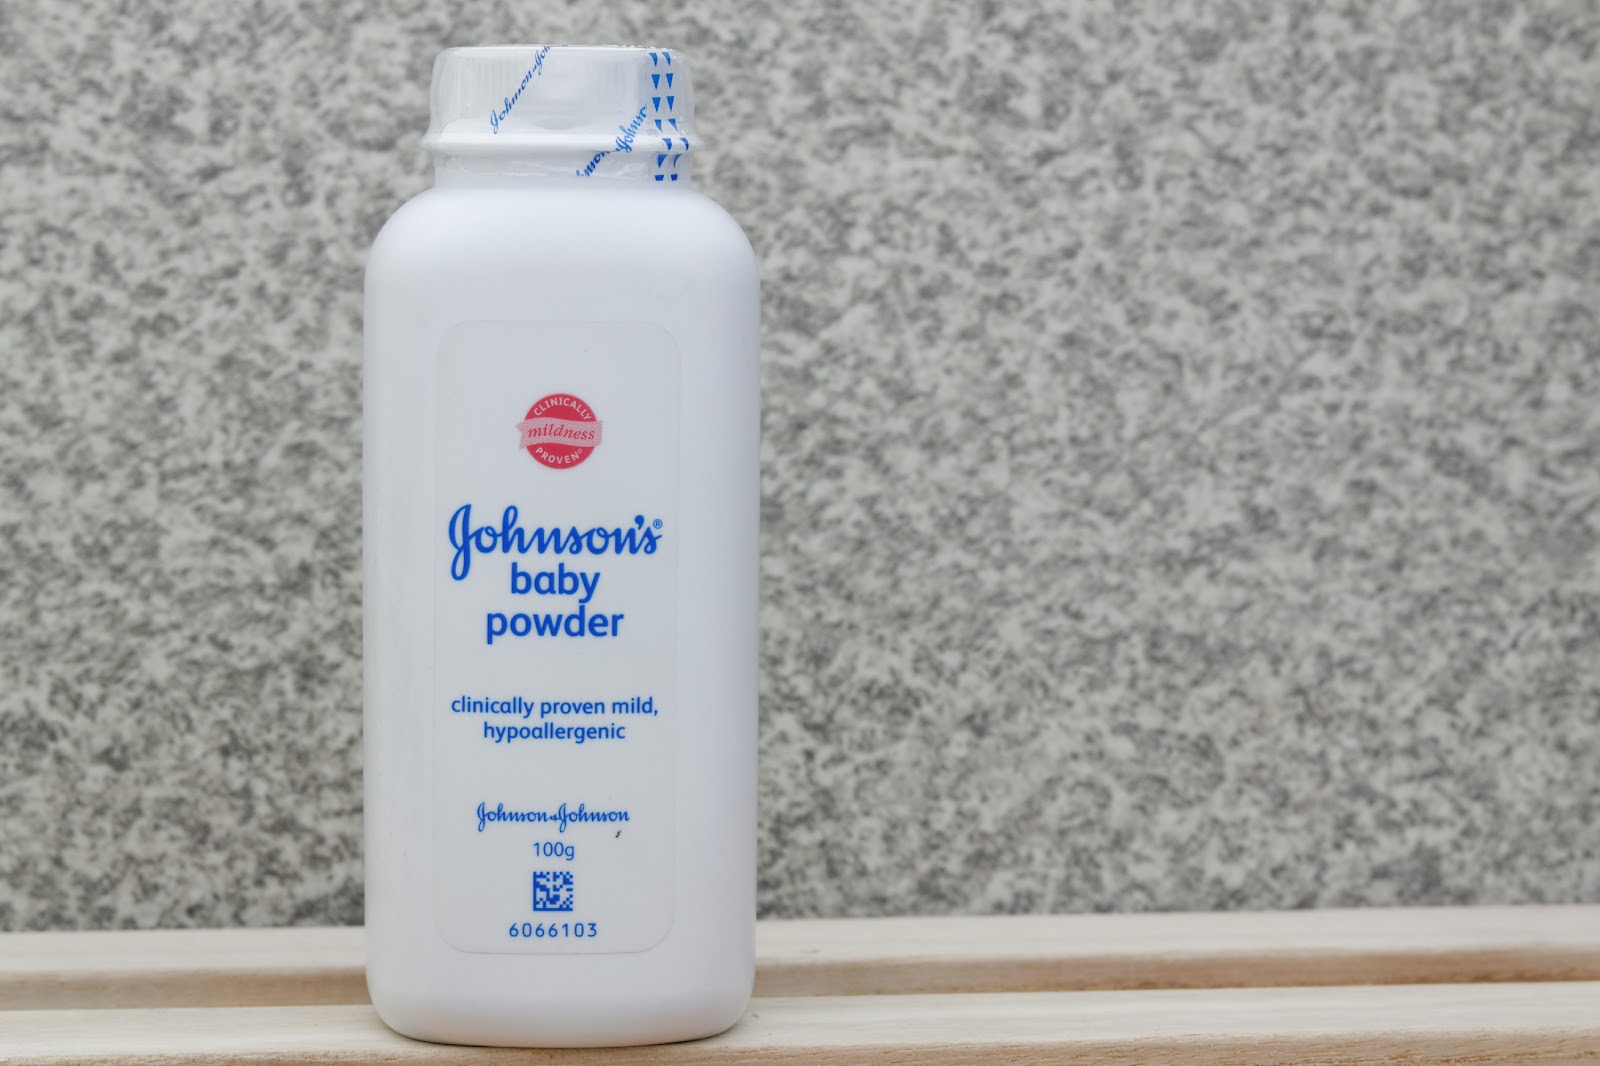 A bottle of Johnson's baby powder